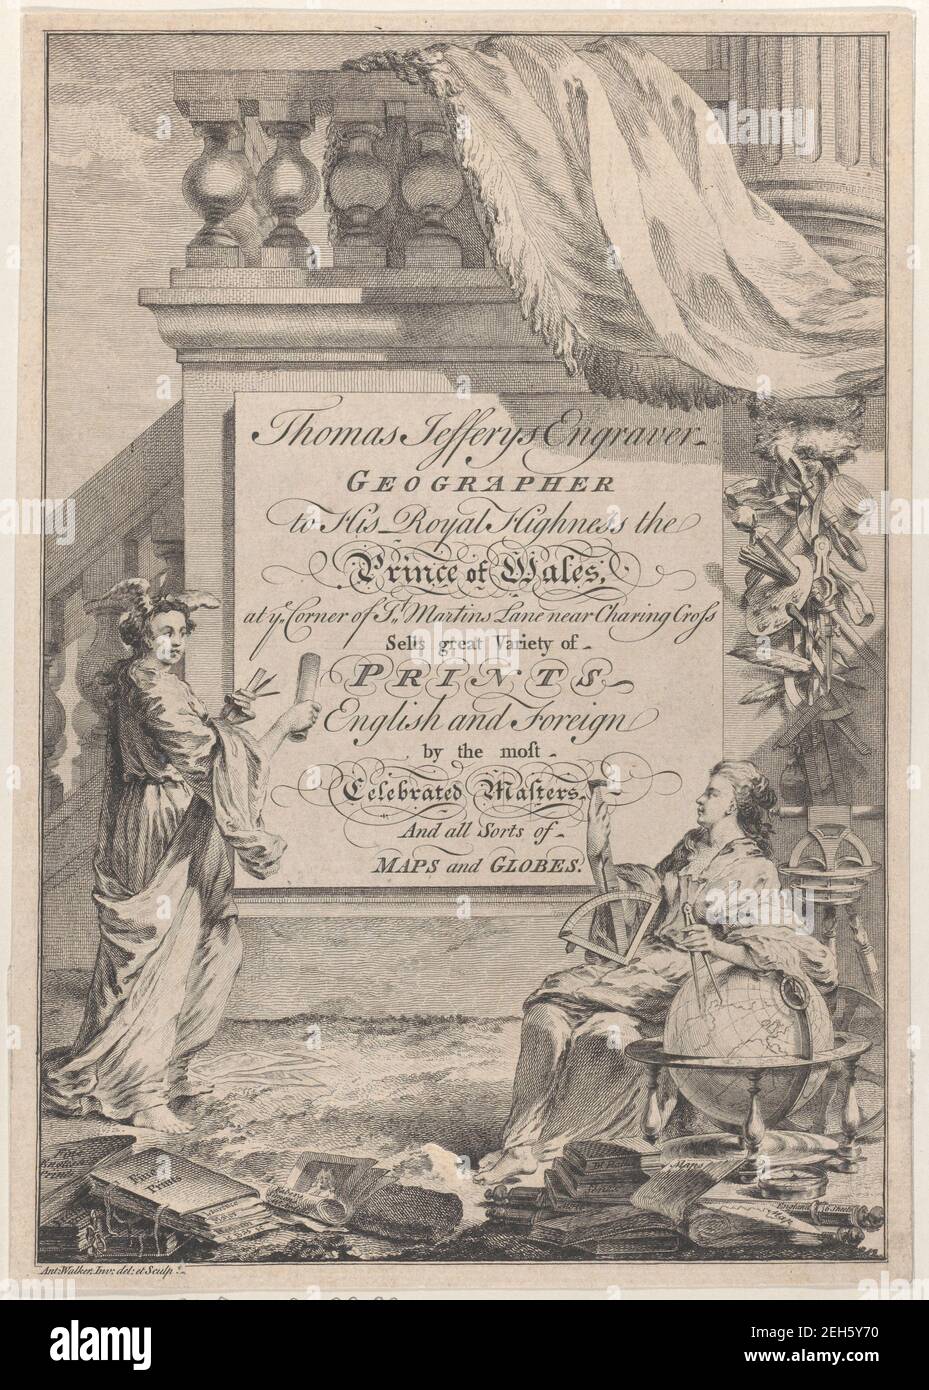 Trade Card for Thomas Jefferys, Engraver, Geographer, and Printseller, 18th century. Stock Photo